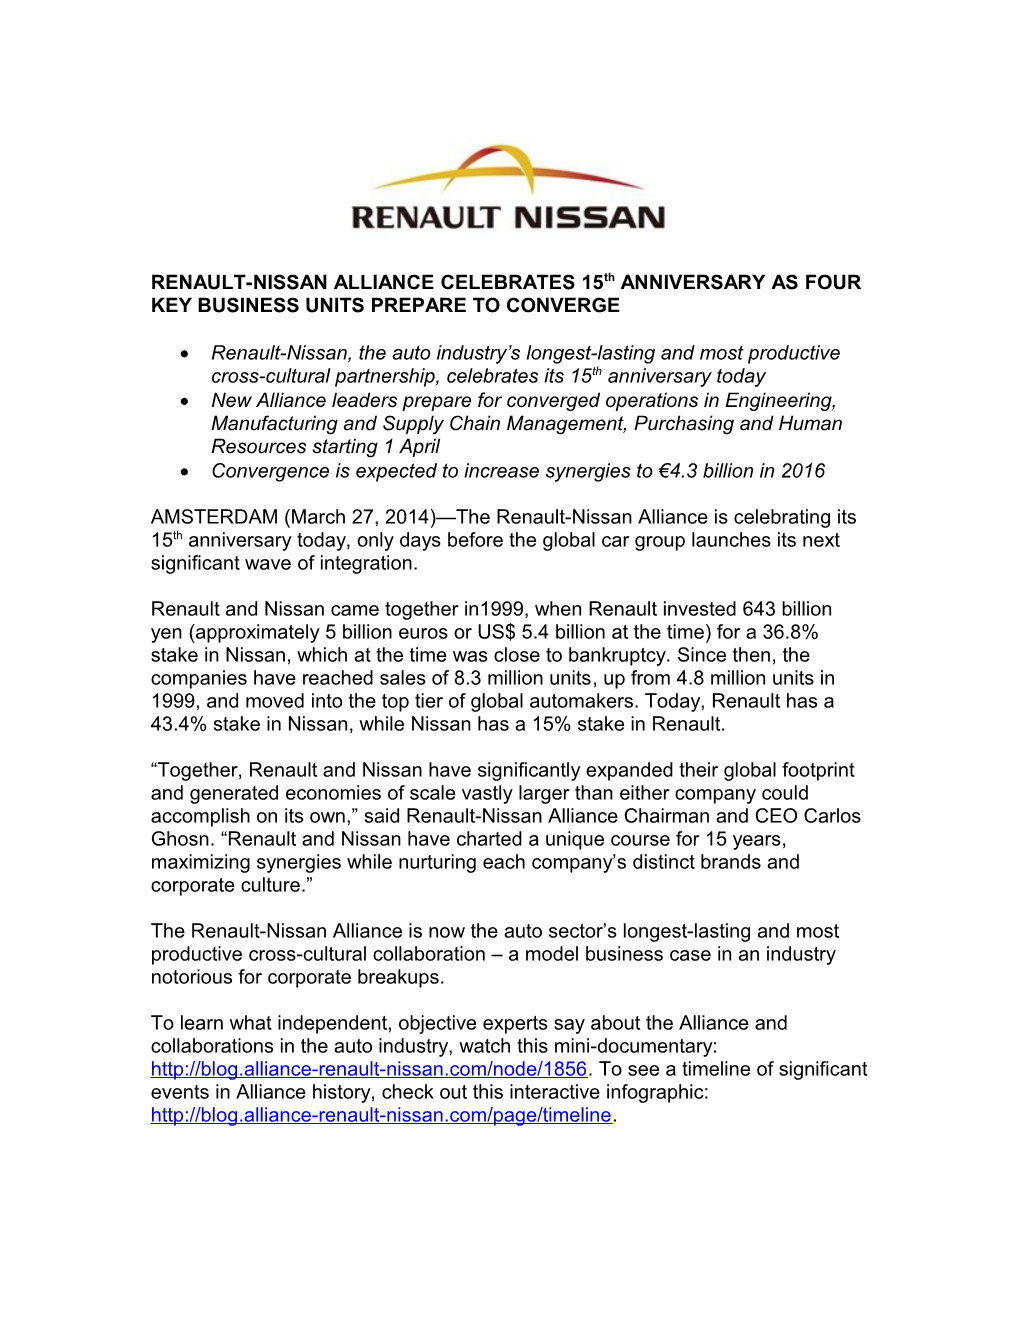 RENAULT-NISSAN ALLIANCE Celebrates15th ANNIVERSARYAS FOUR KEY BUSINESS UNITS PREPARE TO